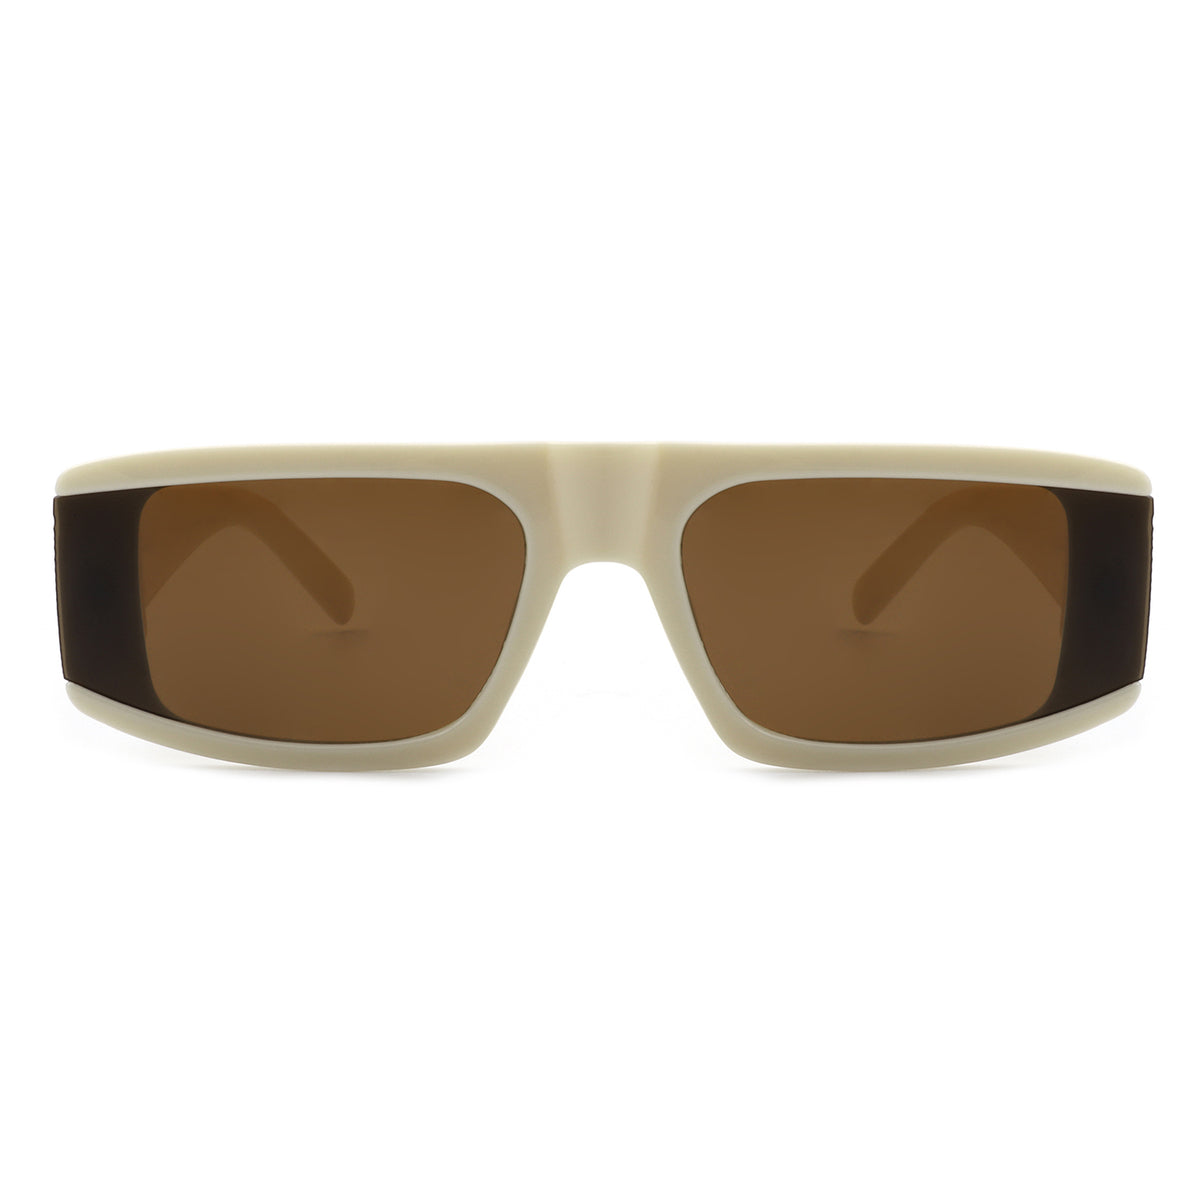 HS1040-1 - Rectangle Vintage Flat Top Retro Fashion Sunglasses